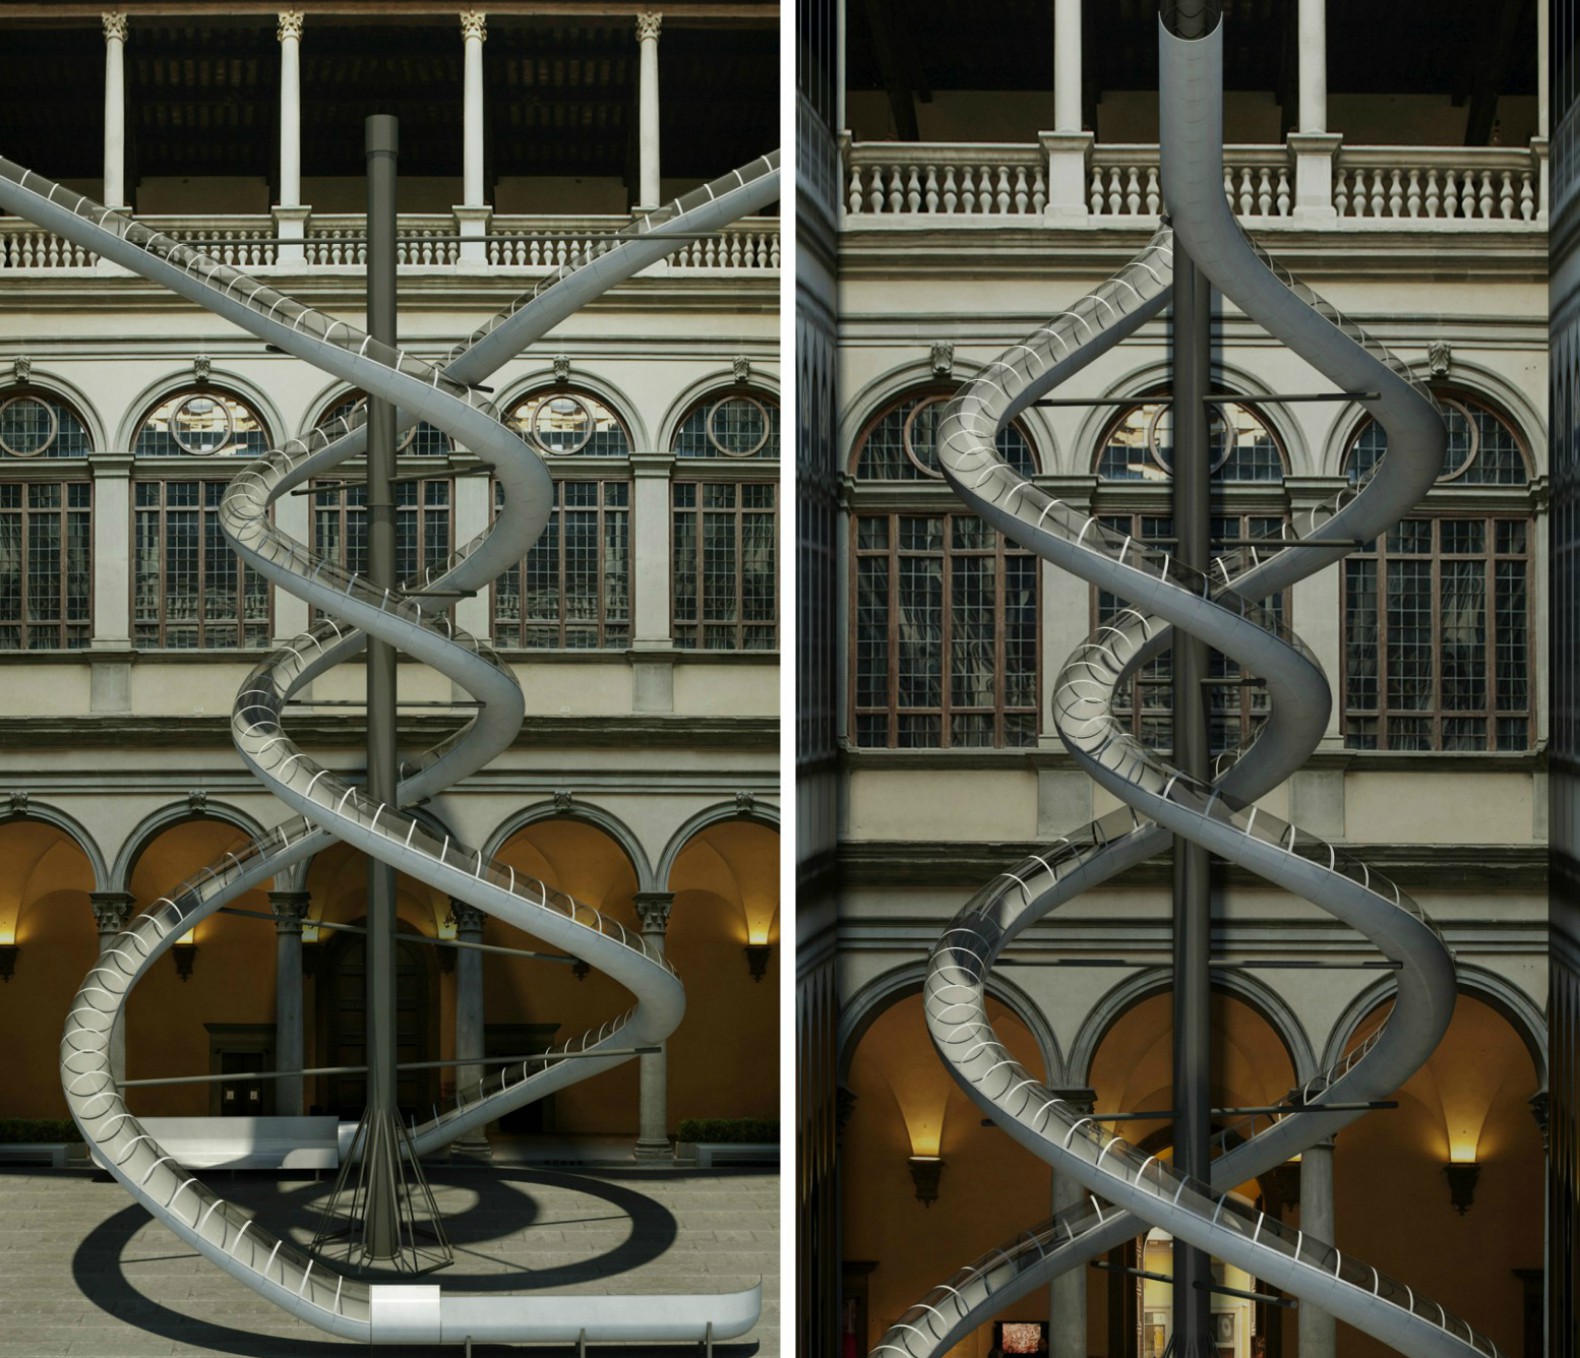 Carsten Höller's giant spiraling slides explore emotional links ...